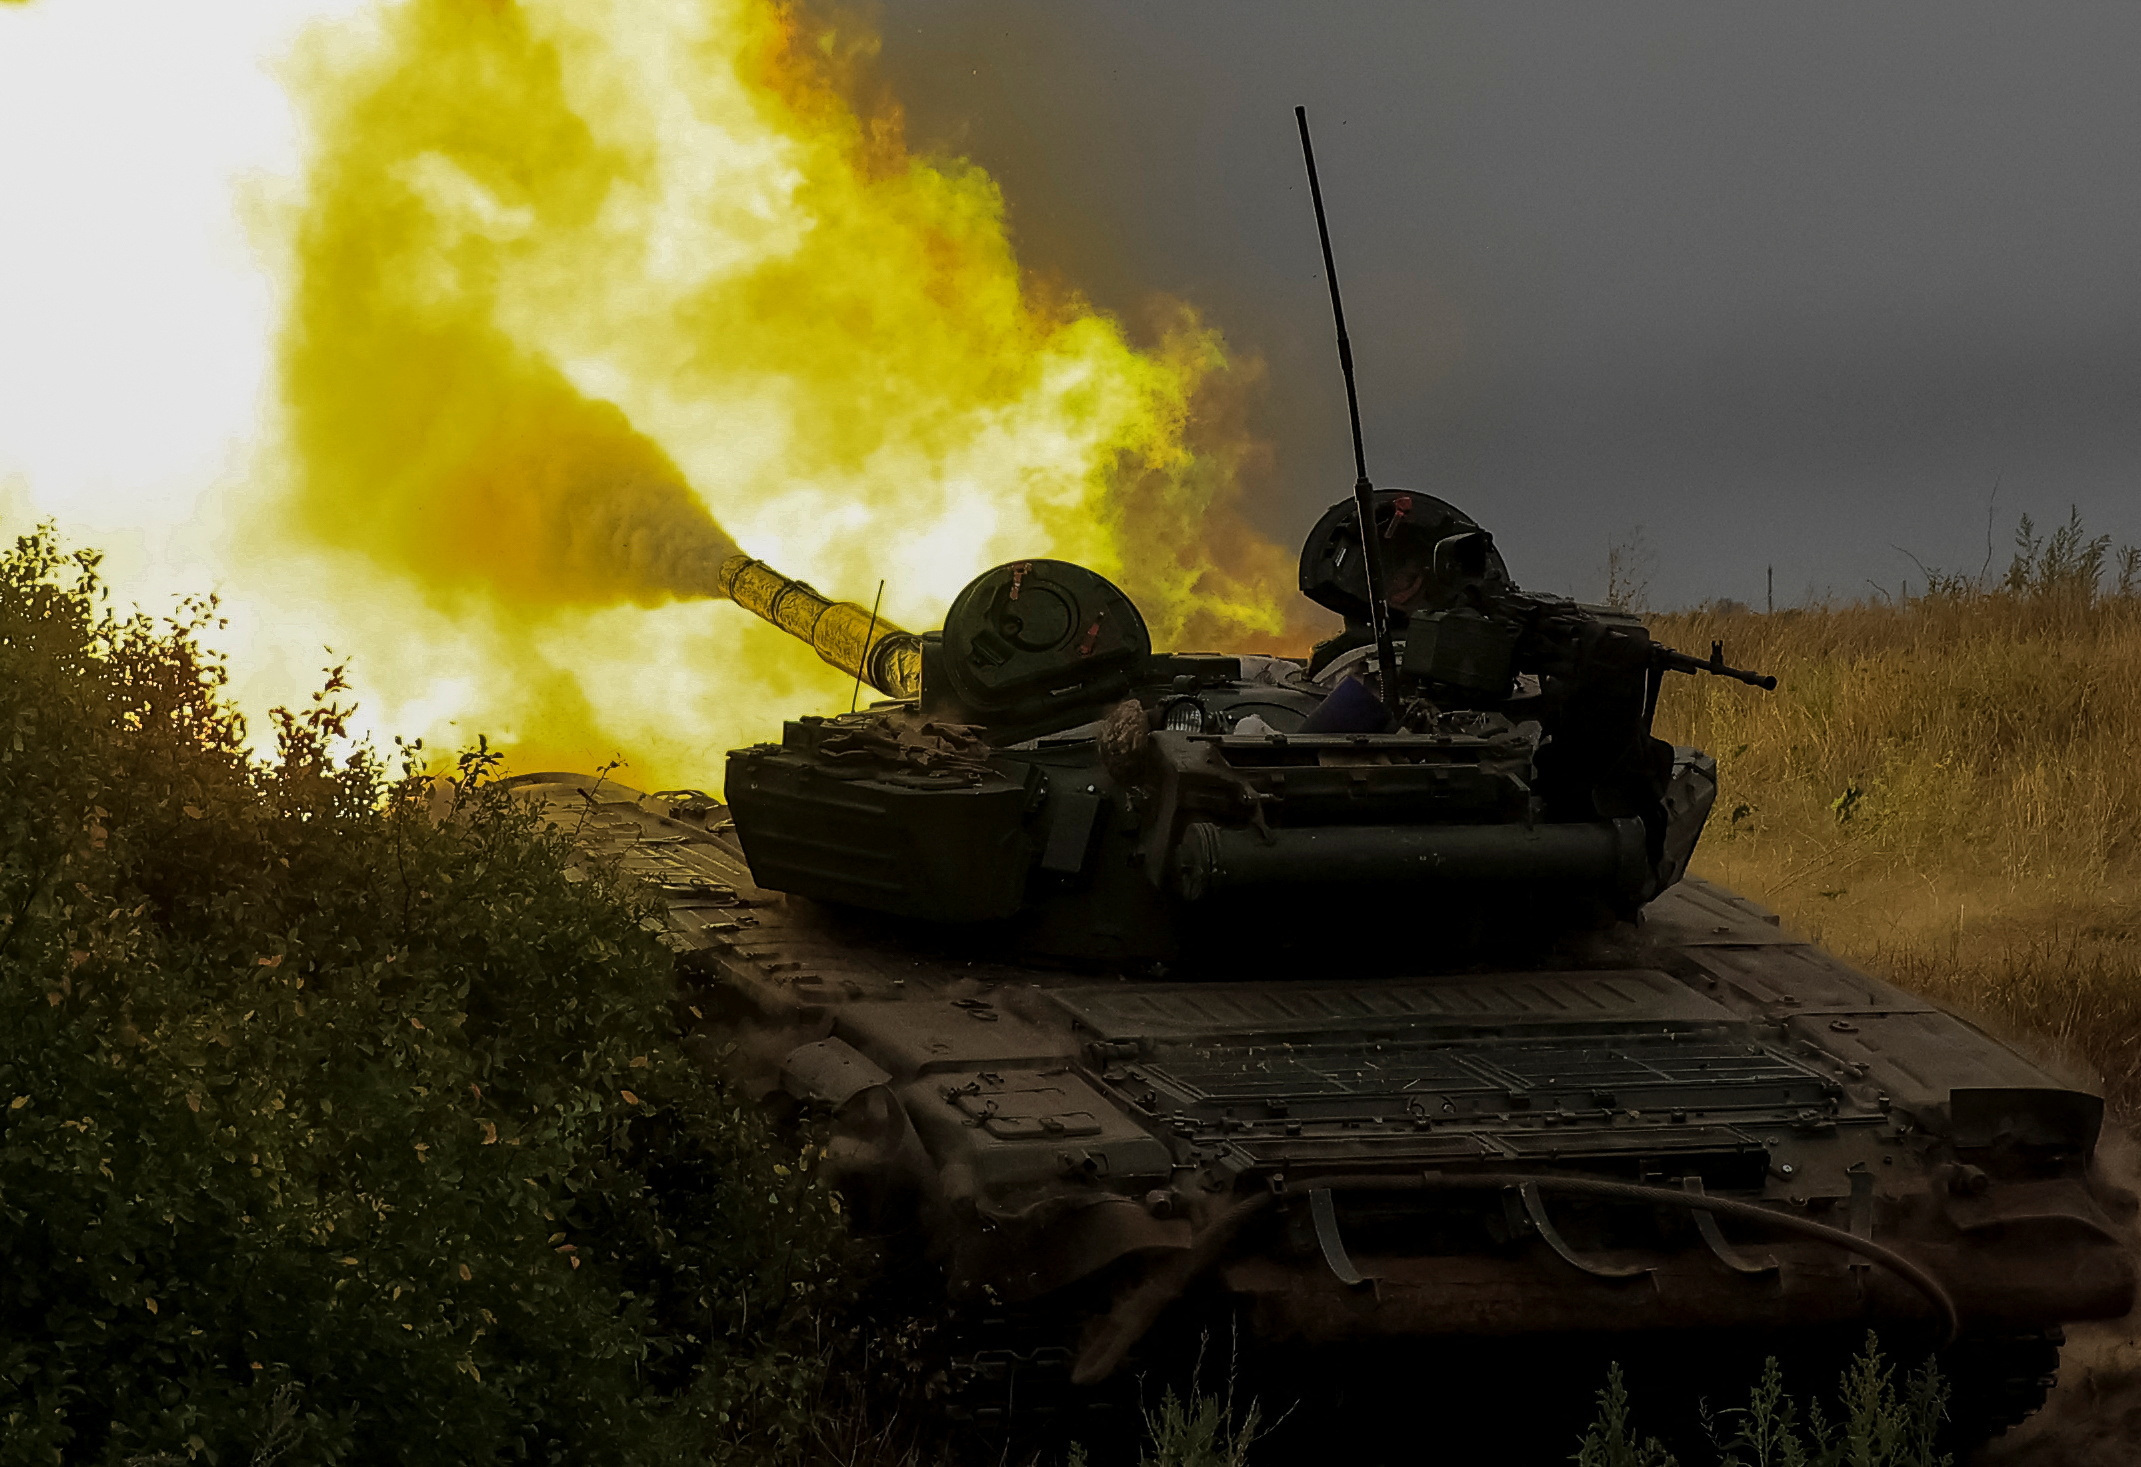 Ukrainian servicemen fire toward Russian troops with a tank at a position in Donetsk region